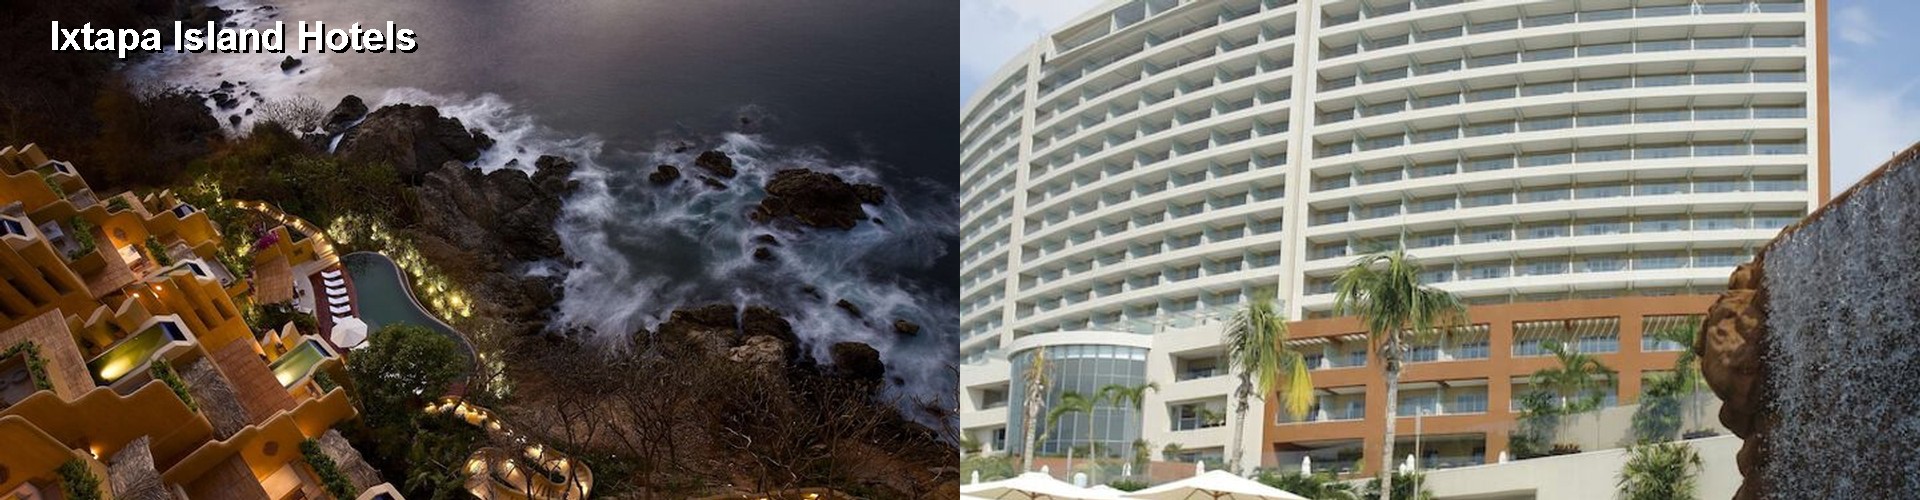 5 Best Hotels near Ixtapa Island